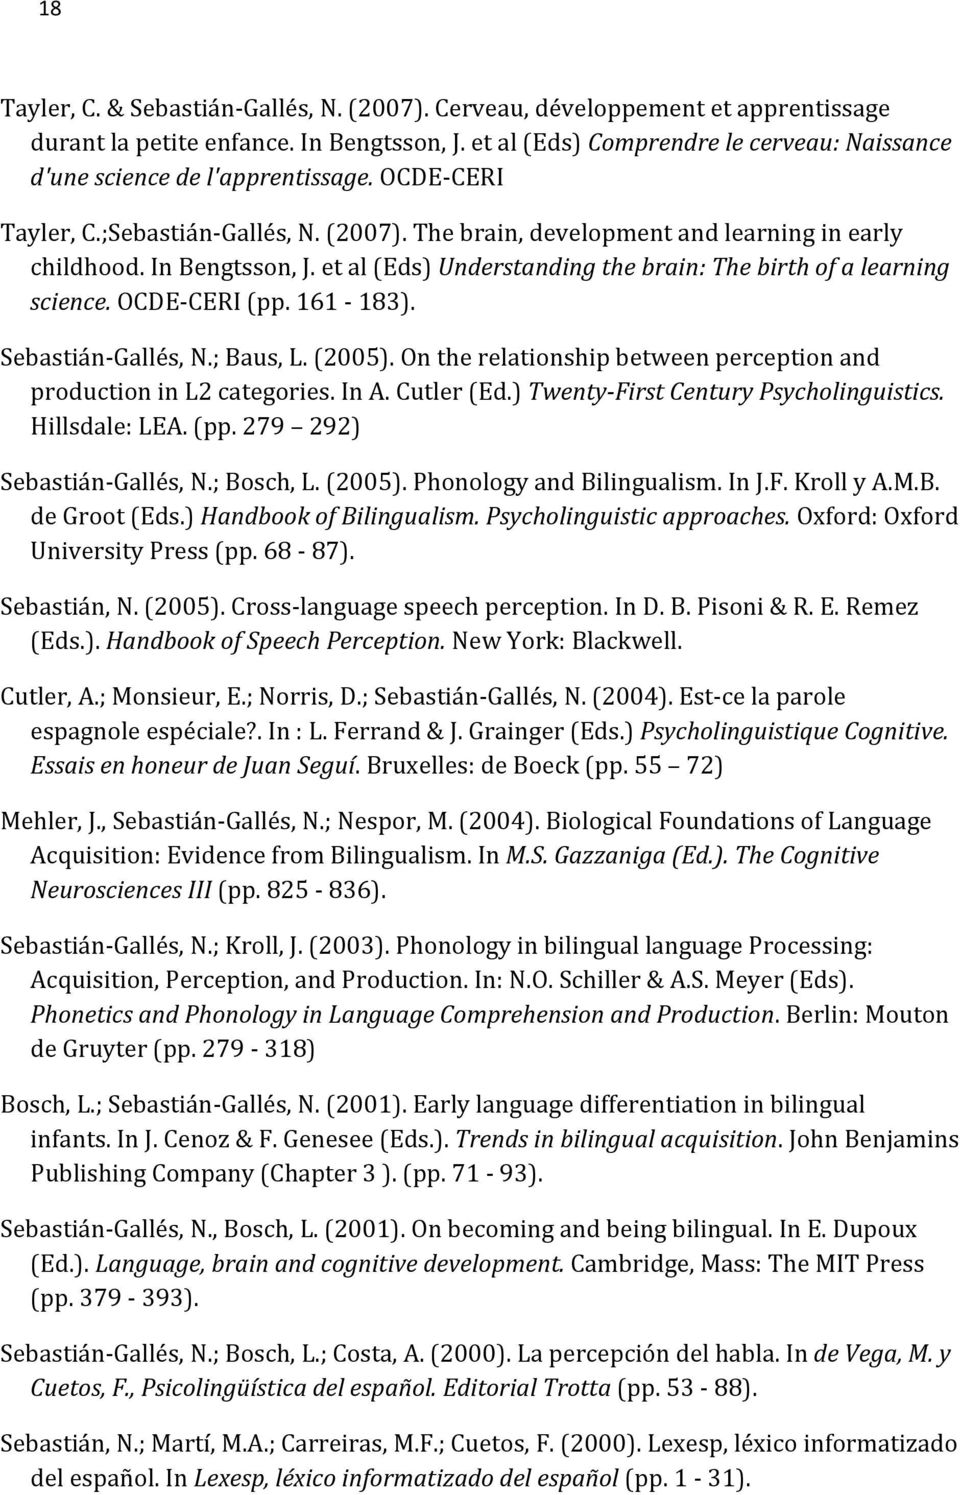 (2005).Ontherelationshipbetweenperceptionand productioninl2categories.ina.cutler(ed.)twenty[firstcenturypsycholinguistics. Hillsdale:LEA.(pp.279 292) SebastiánSGallés,N.;Bosch,L.(2005).PhonologyandBilingualism.